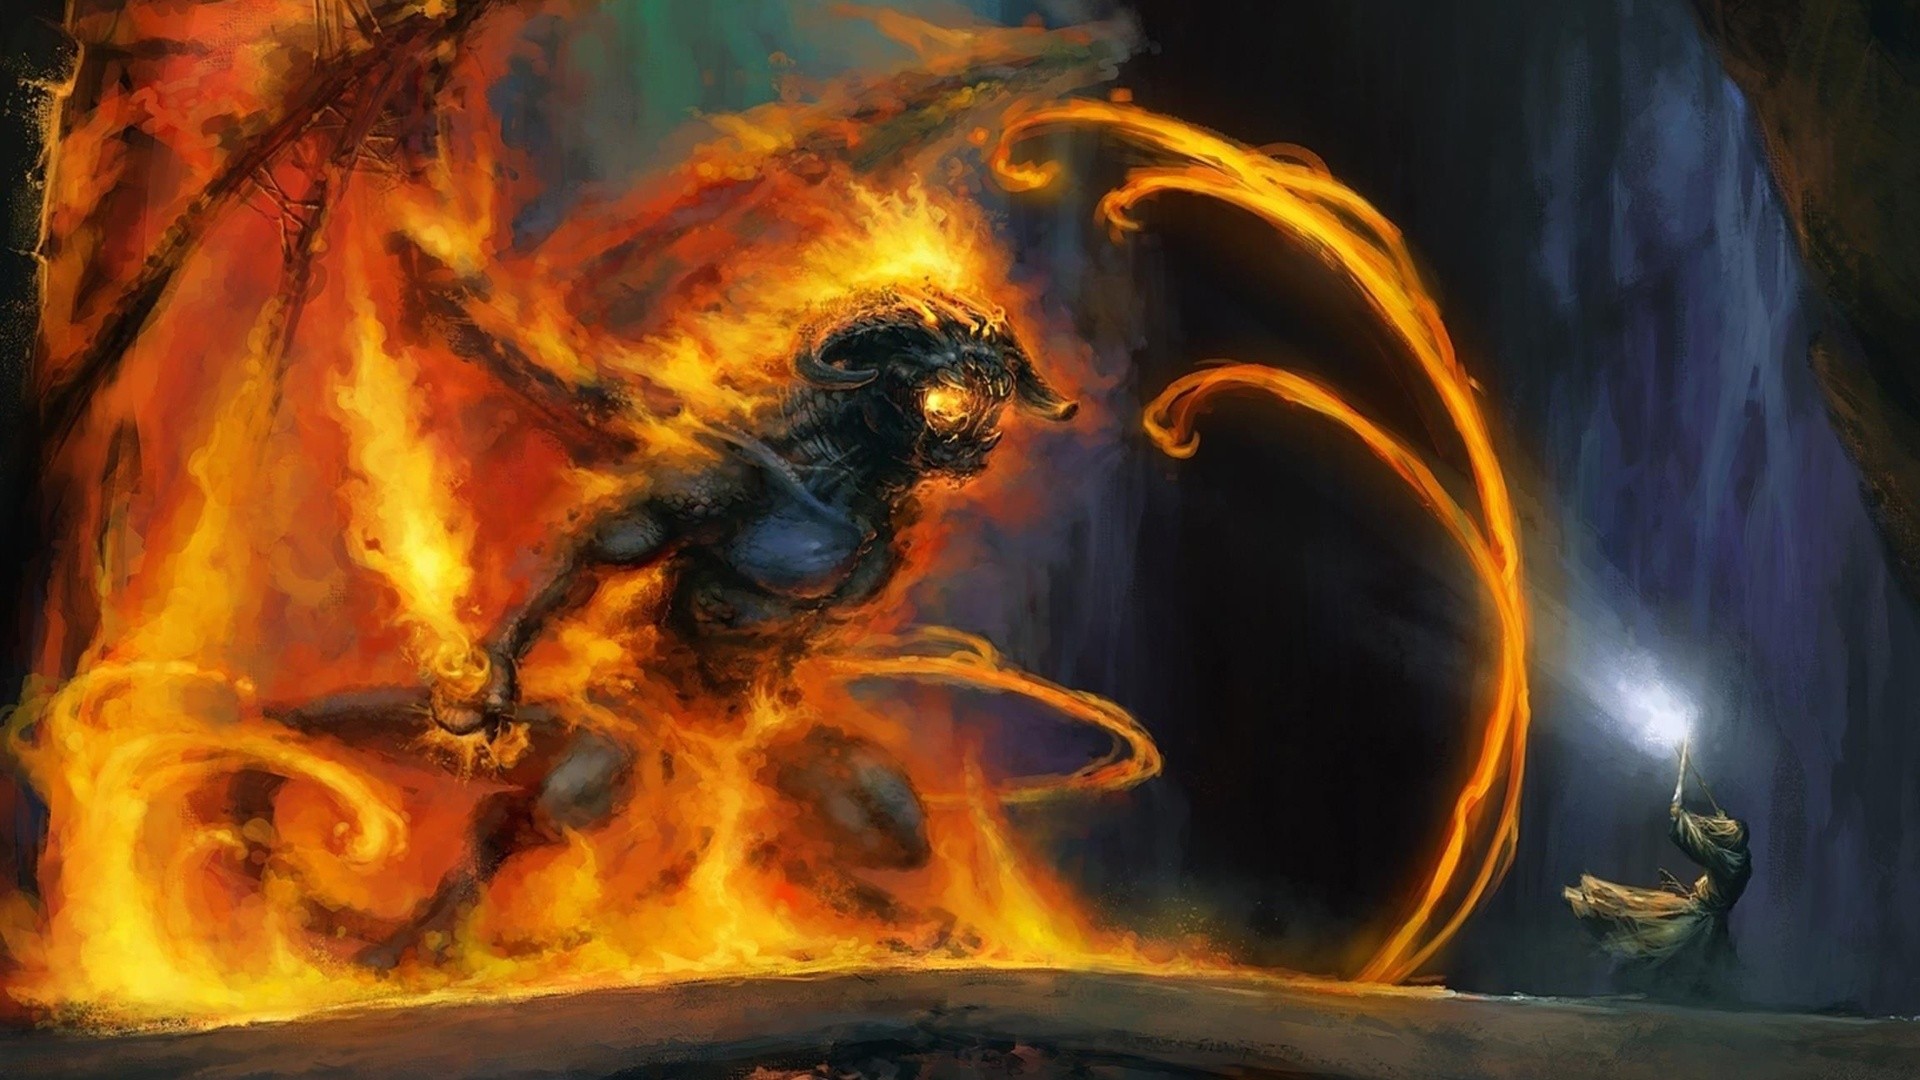 Digital Art Fantasy Art Devils Death Balrog The Lord Of The Rings Fire Gandalf Wings 1920x1080